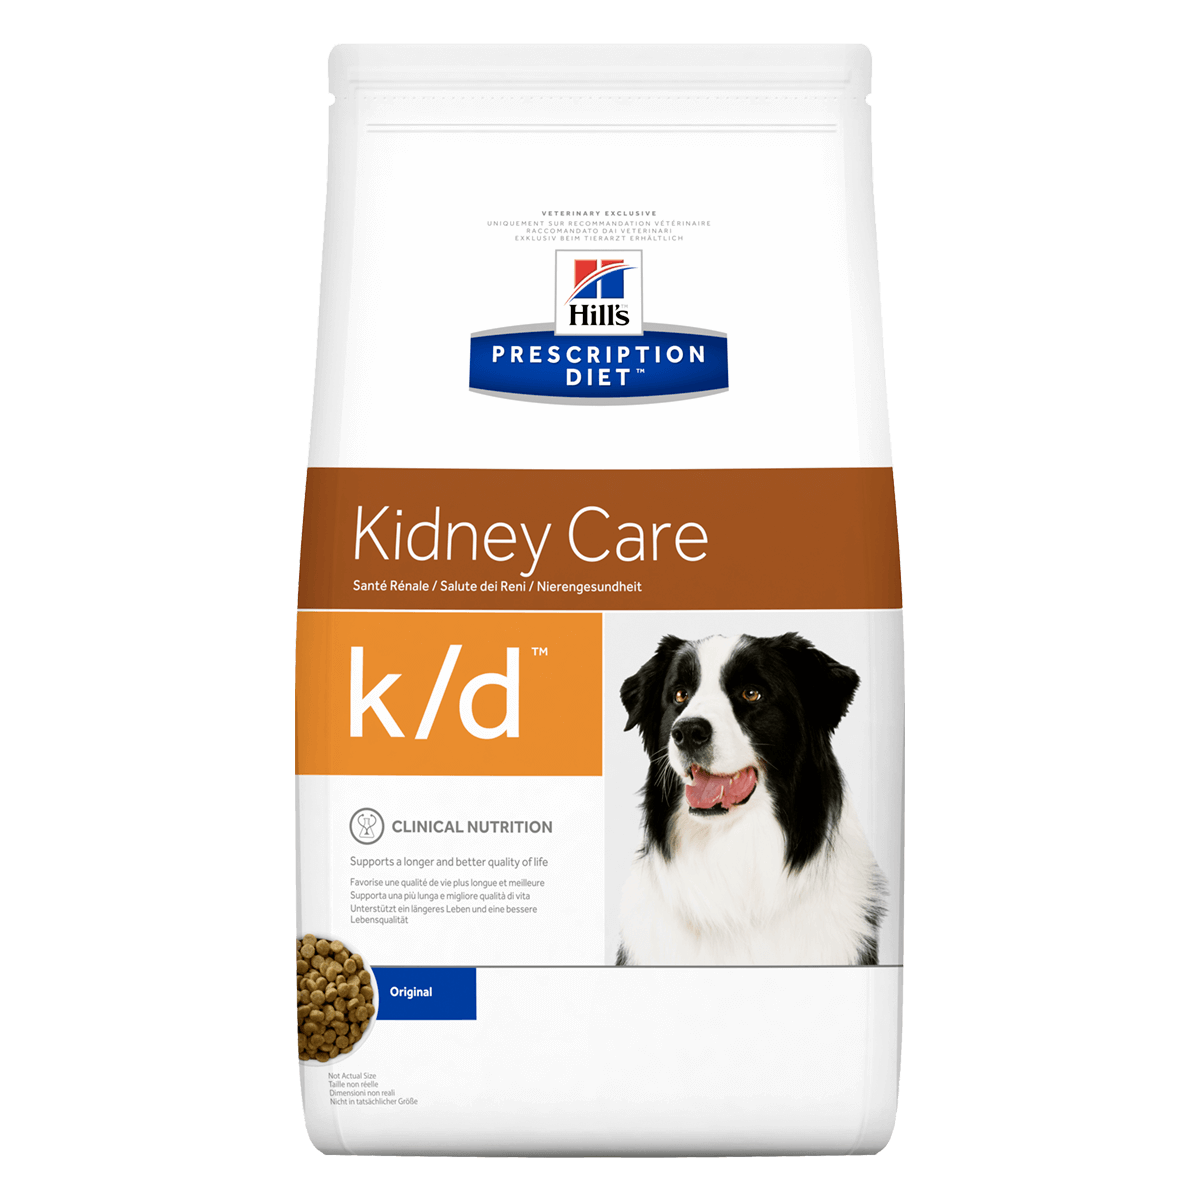 Hill's Prescription Diet k/d Kidney Care, 12 кг - диетический корм Хилс для собак